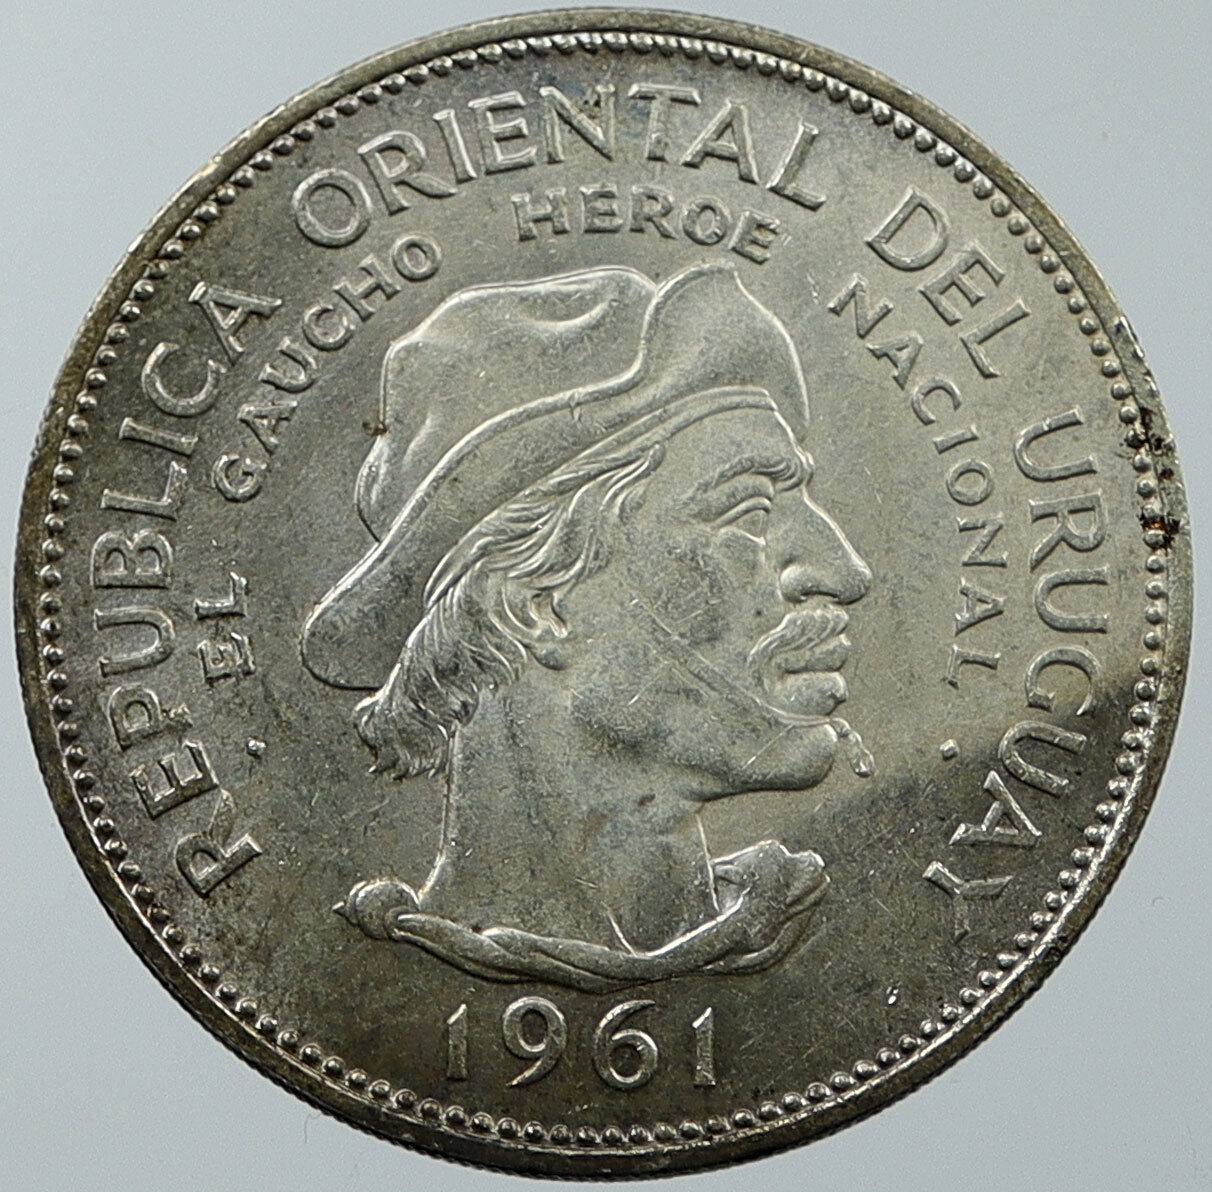 1961 URUGUAY w El Caucho Hero Against Spain ANTIQUE Silver 10 Pesos Coin i116648